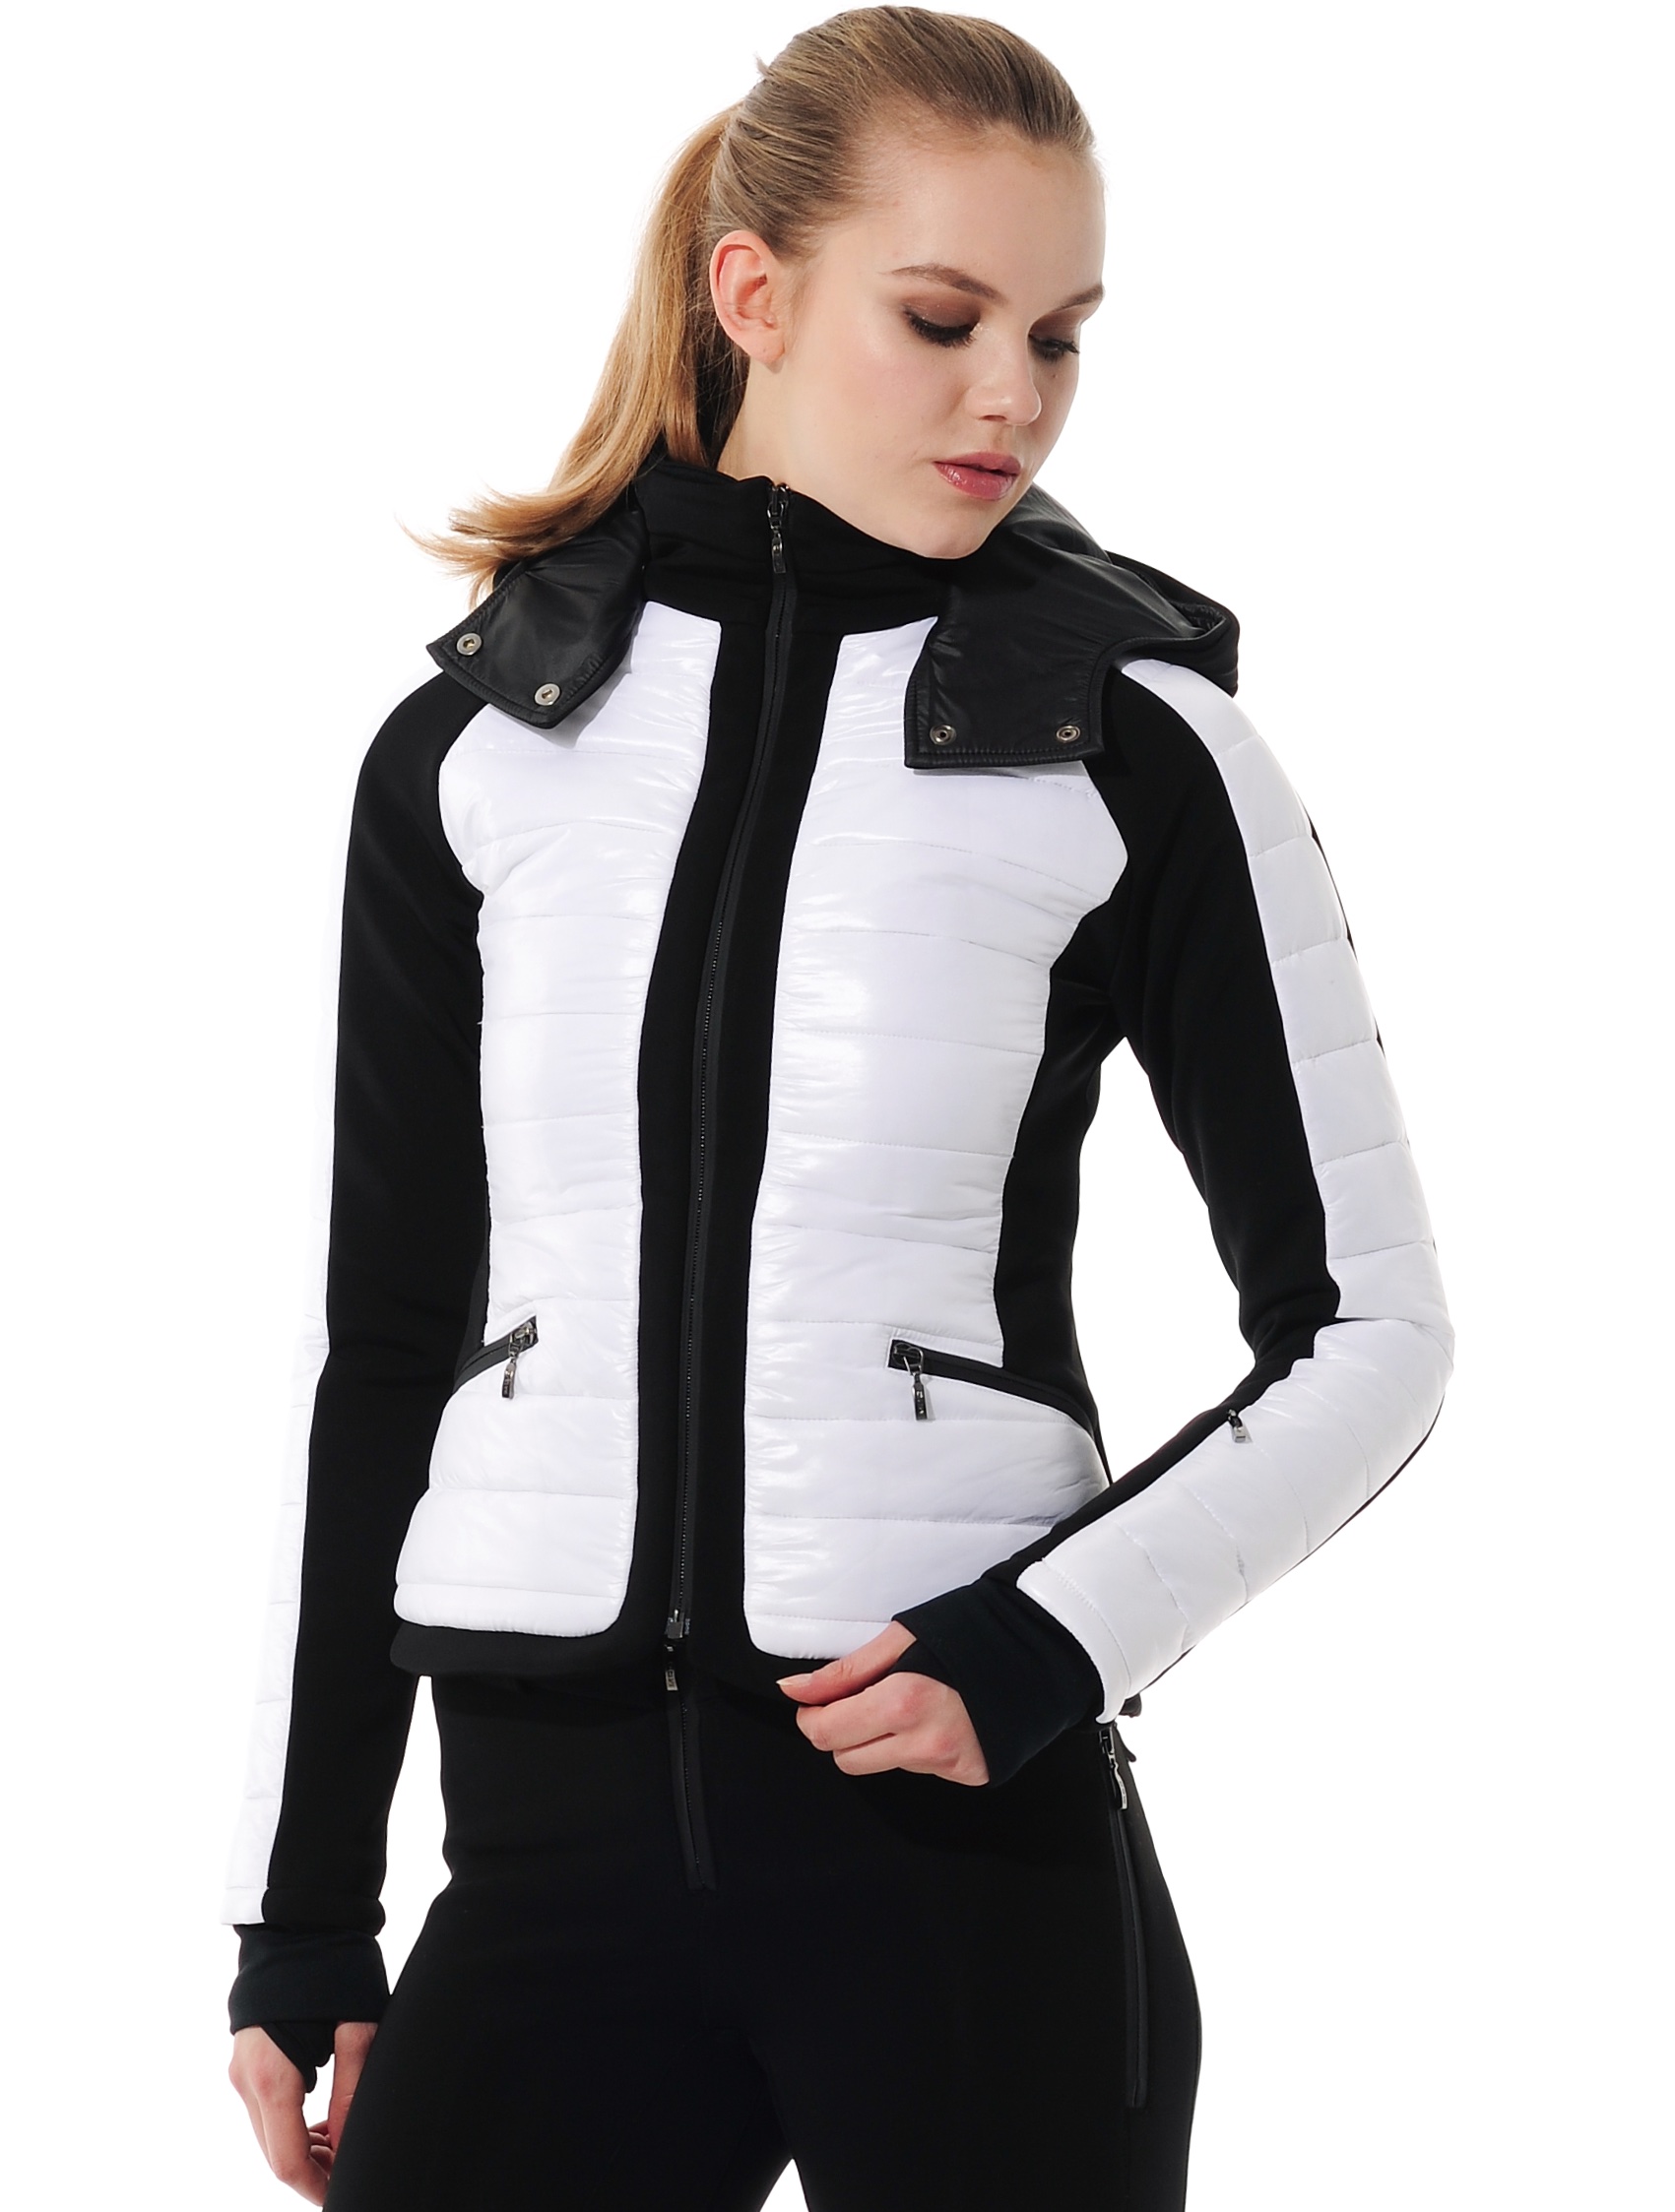 ski jacket white/black 